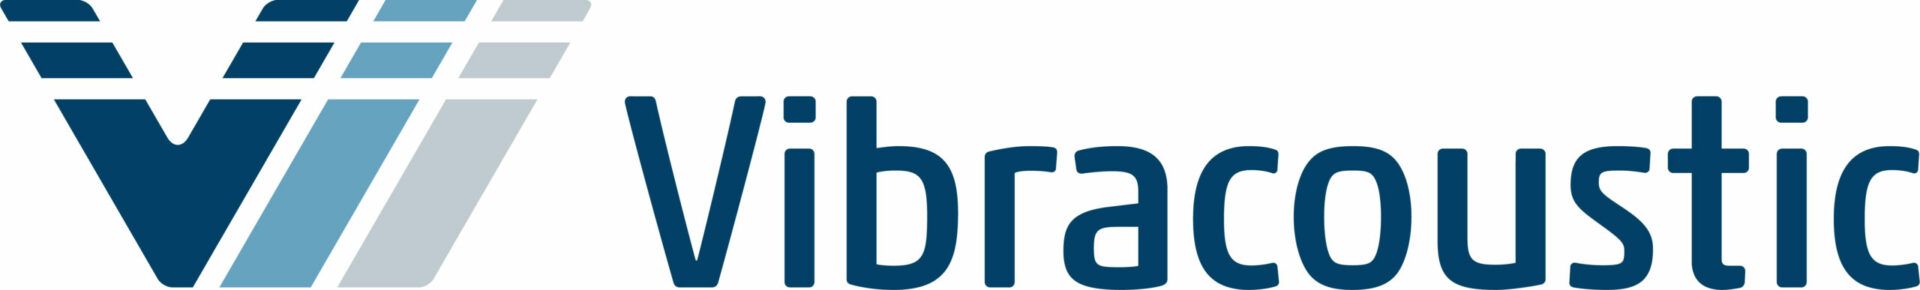 vibracoustic logo link to website